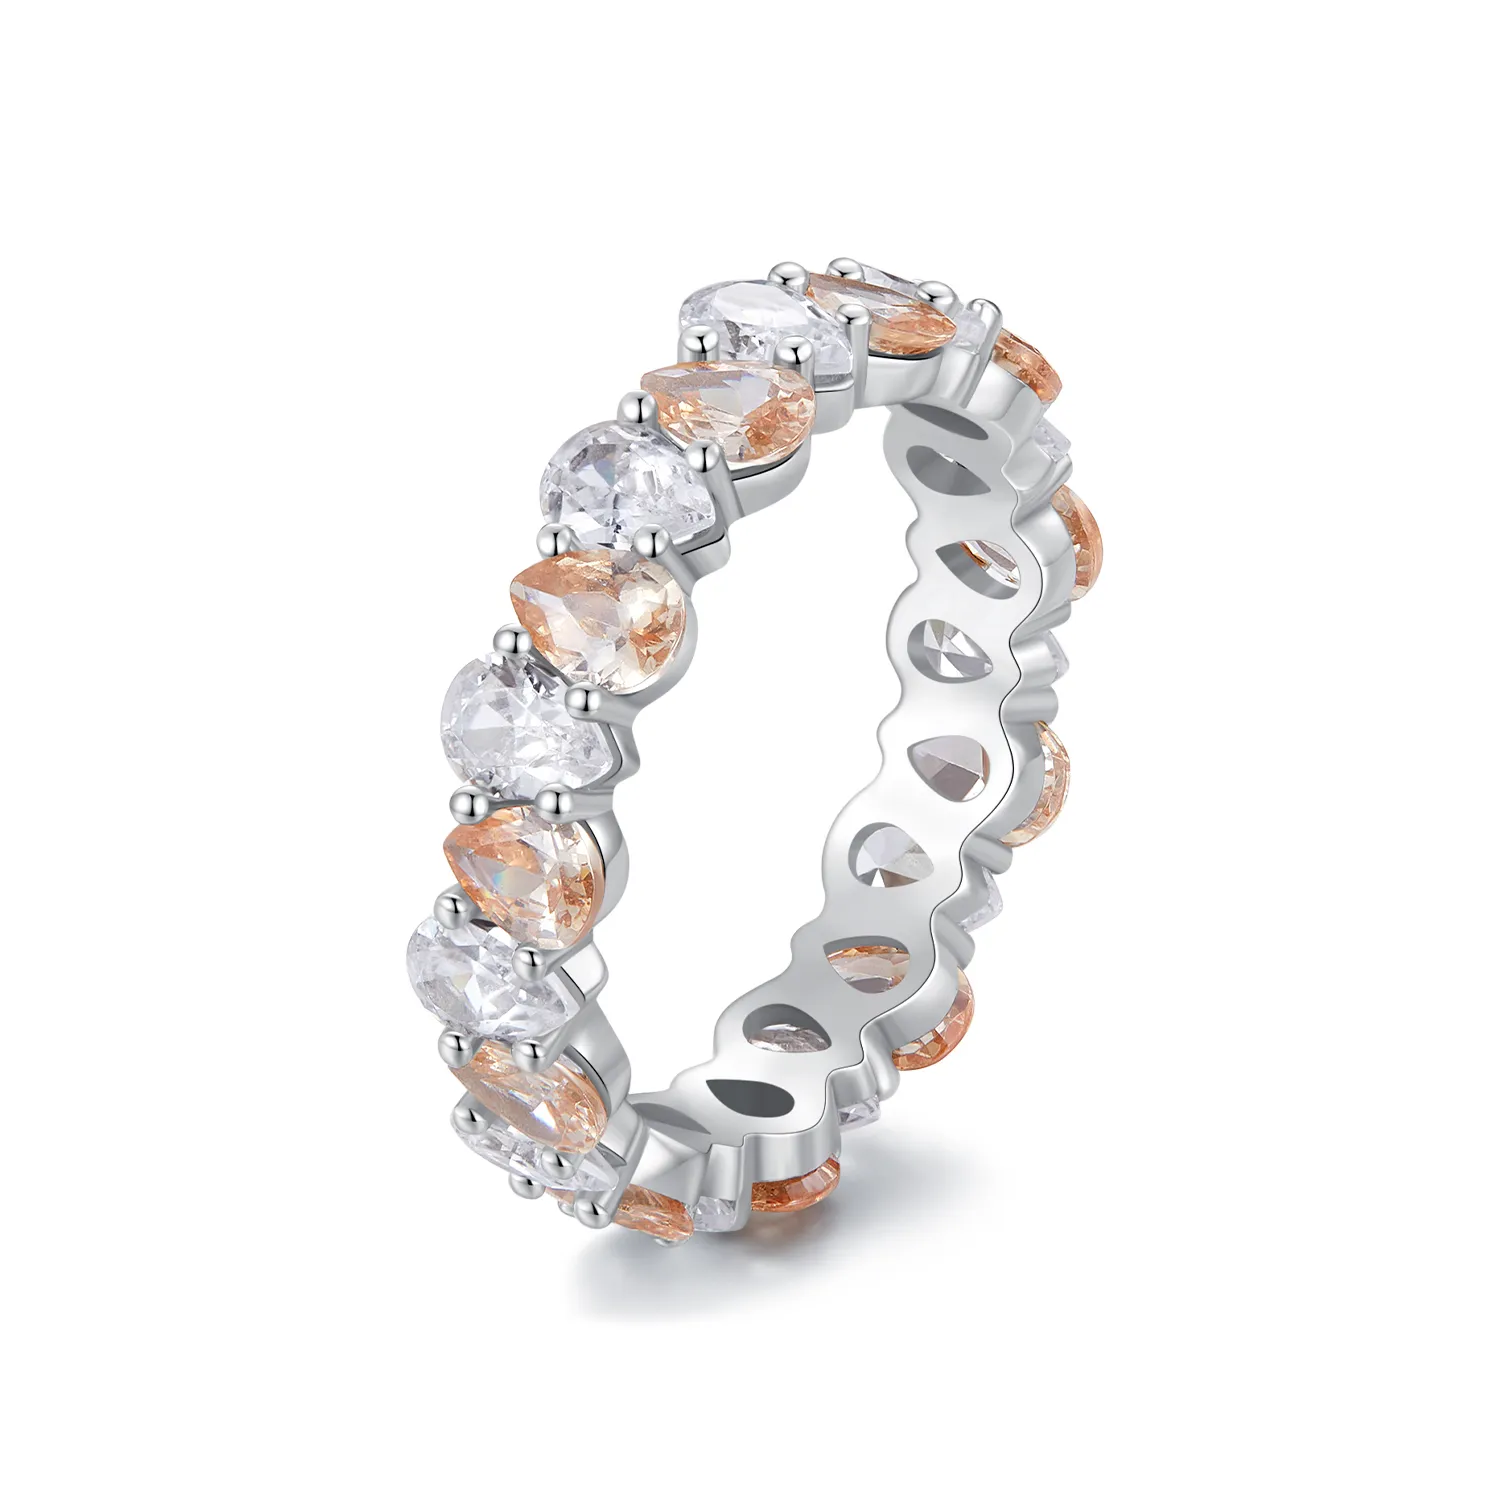 Pandora Style Brilliant Ring - BSR477